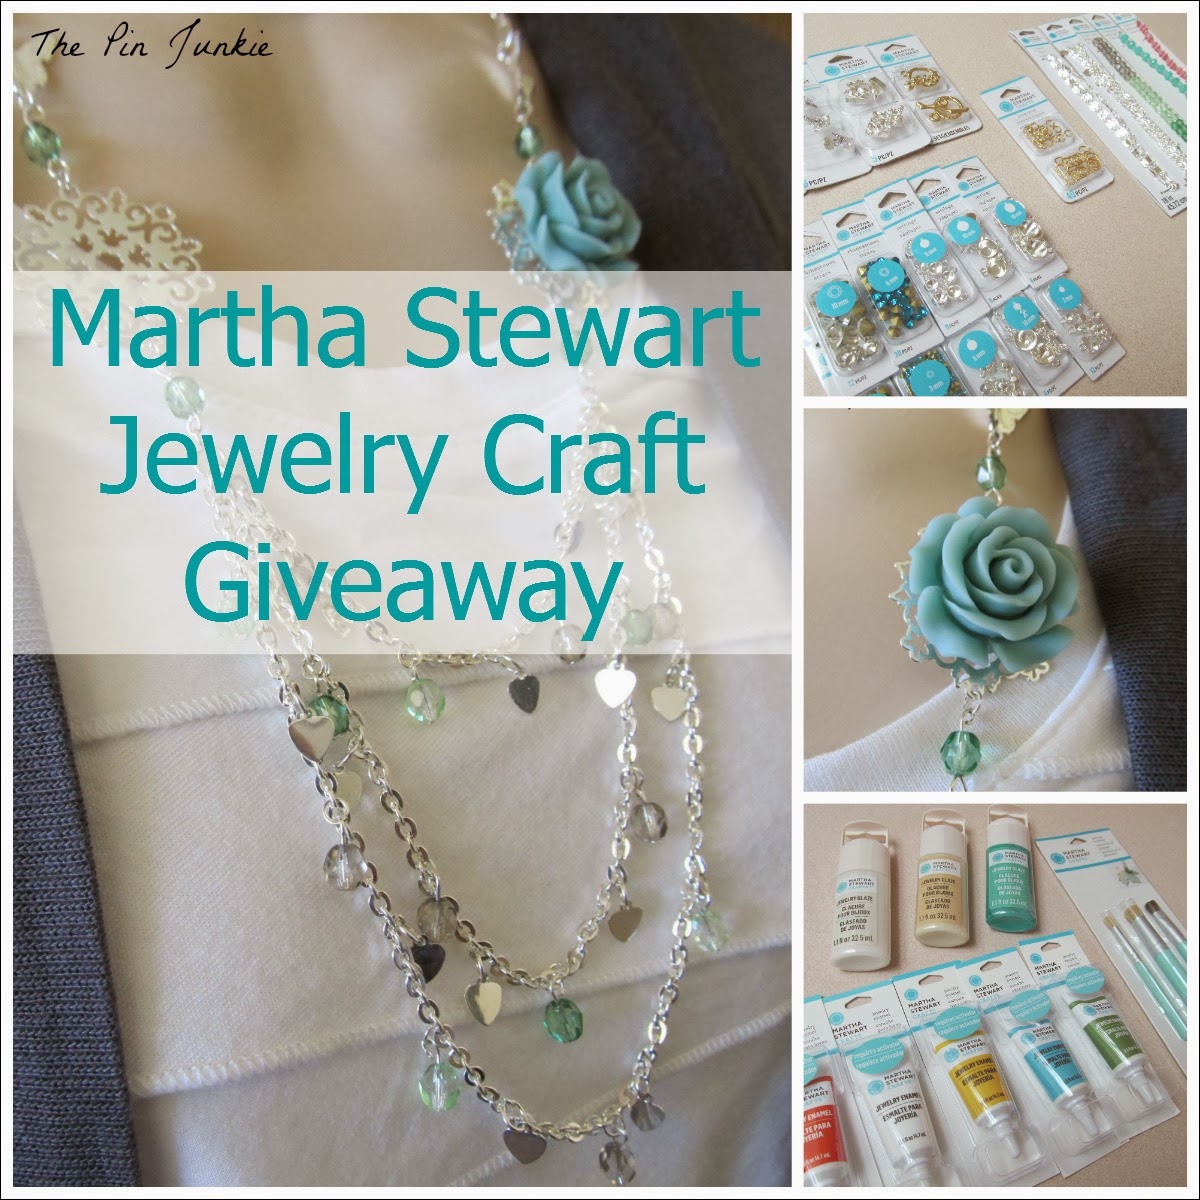 Martha Stewart Jewelry Craft Giveaway